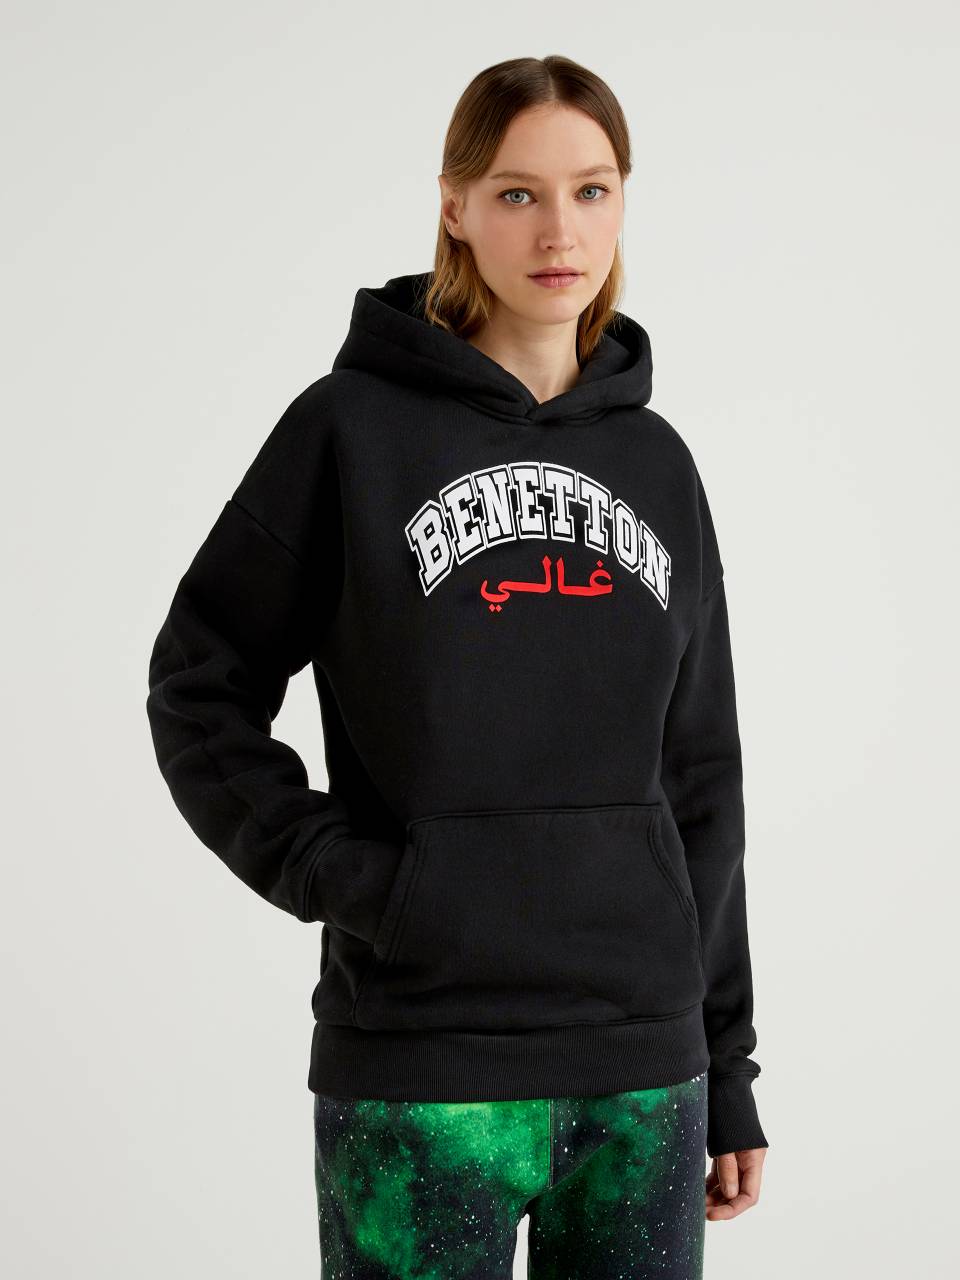 Benetton Black sweatshirt with hood and print by Ghali. 1